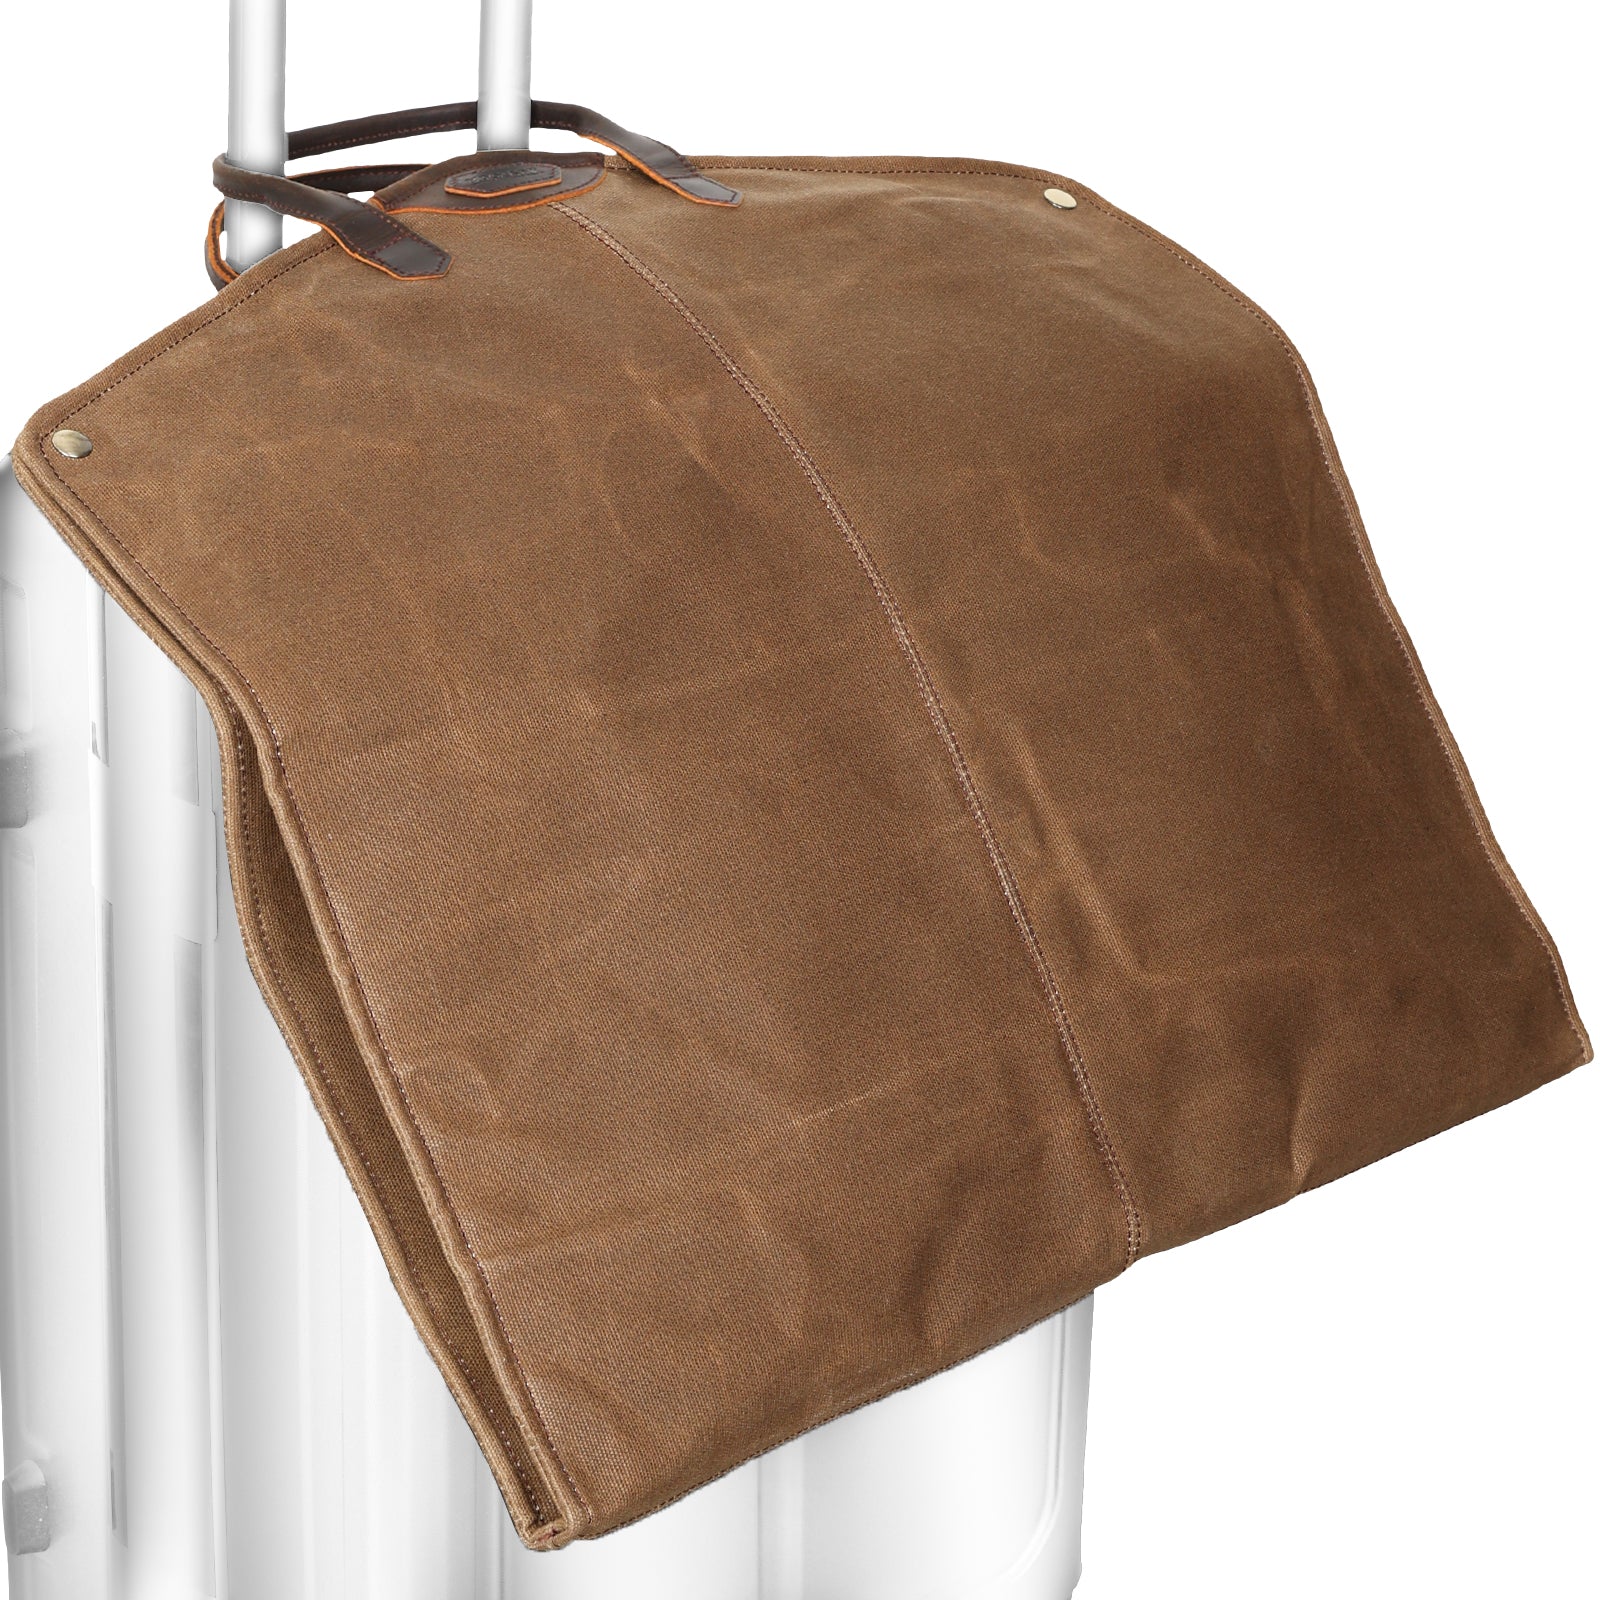 Waxed Canvas Full Grain Leather Trim Garment Bag for Travel